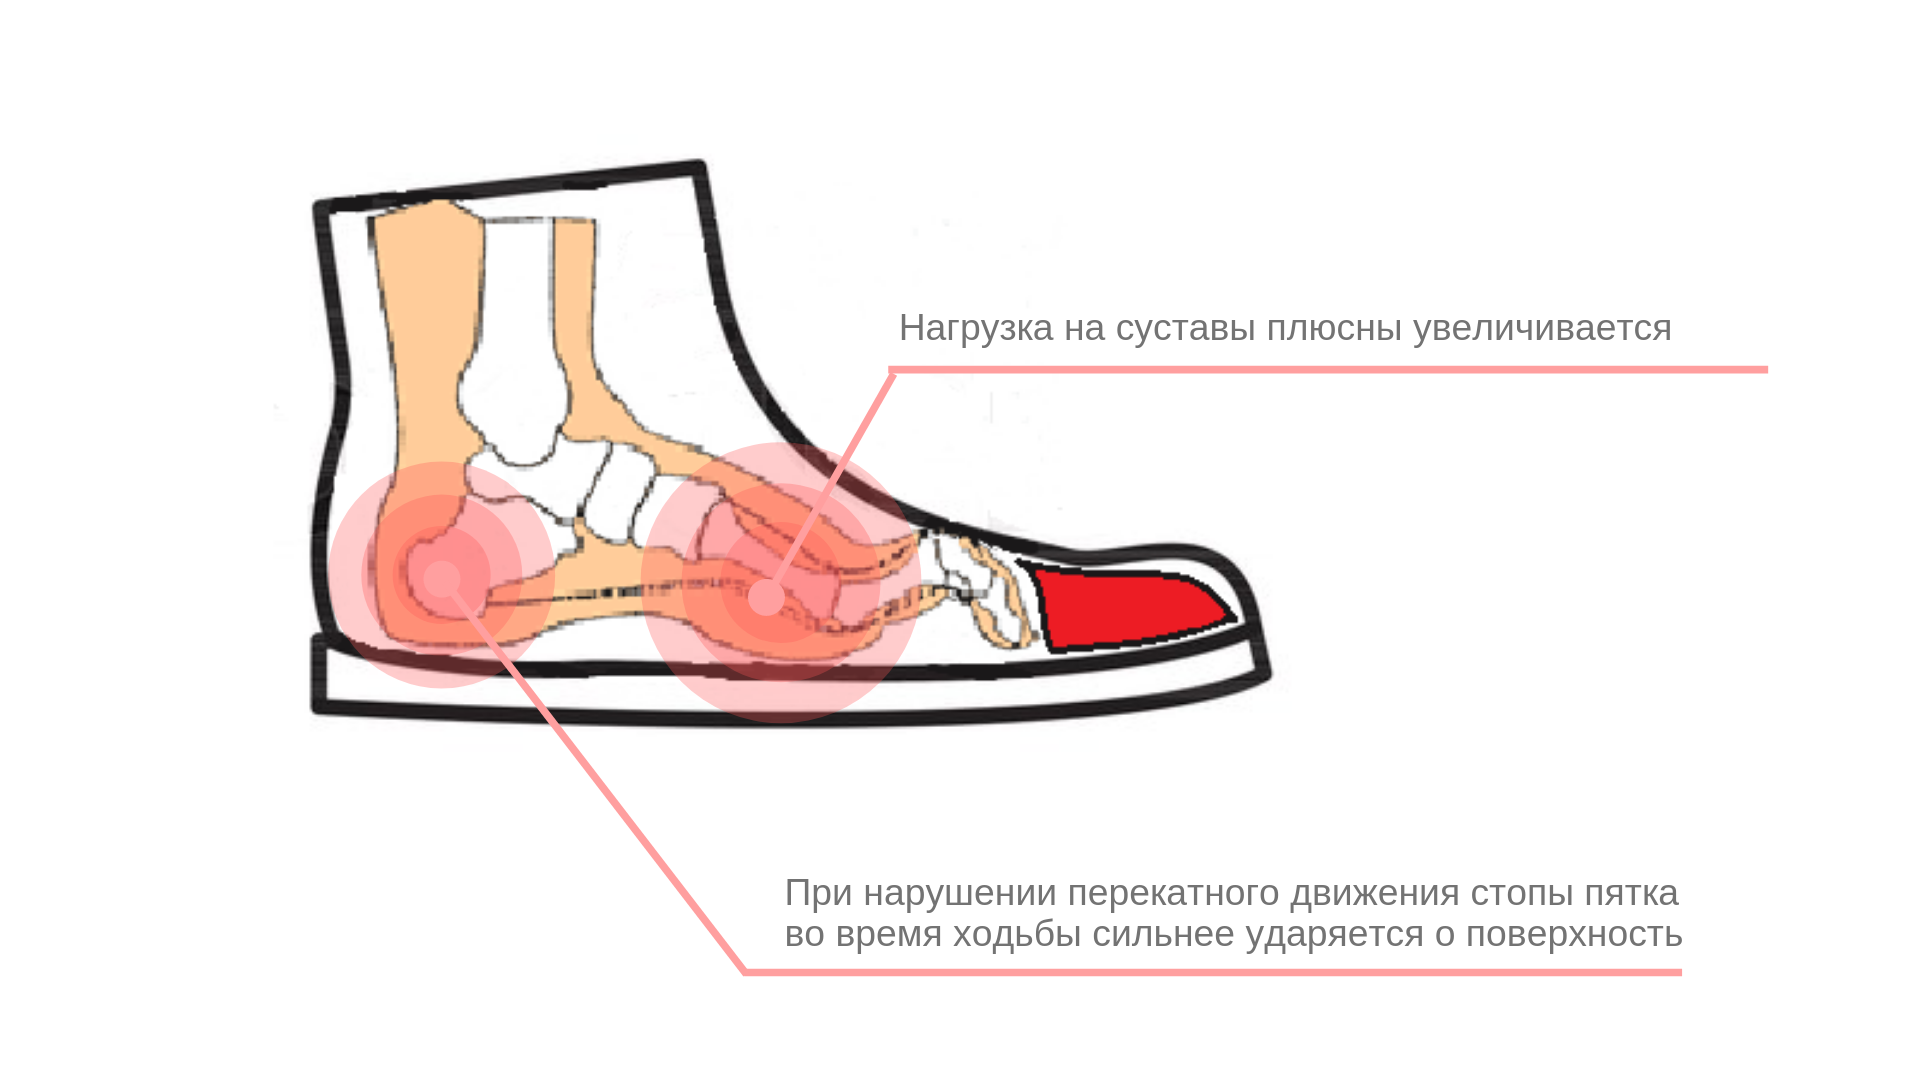 Спадают туфли - 71 ответ на форуме slep-kostroma.ru ()